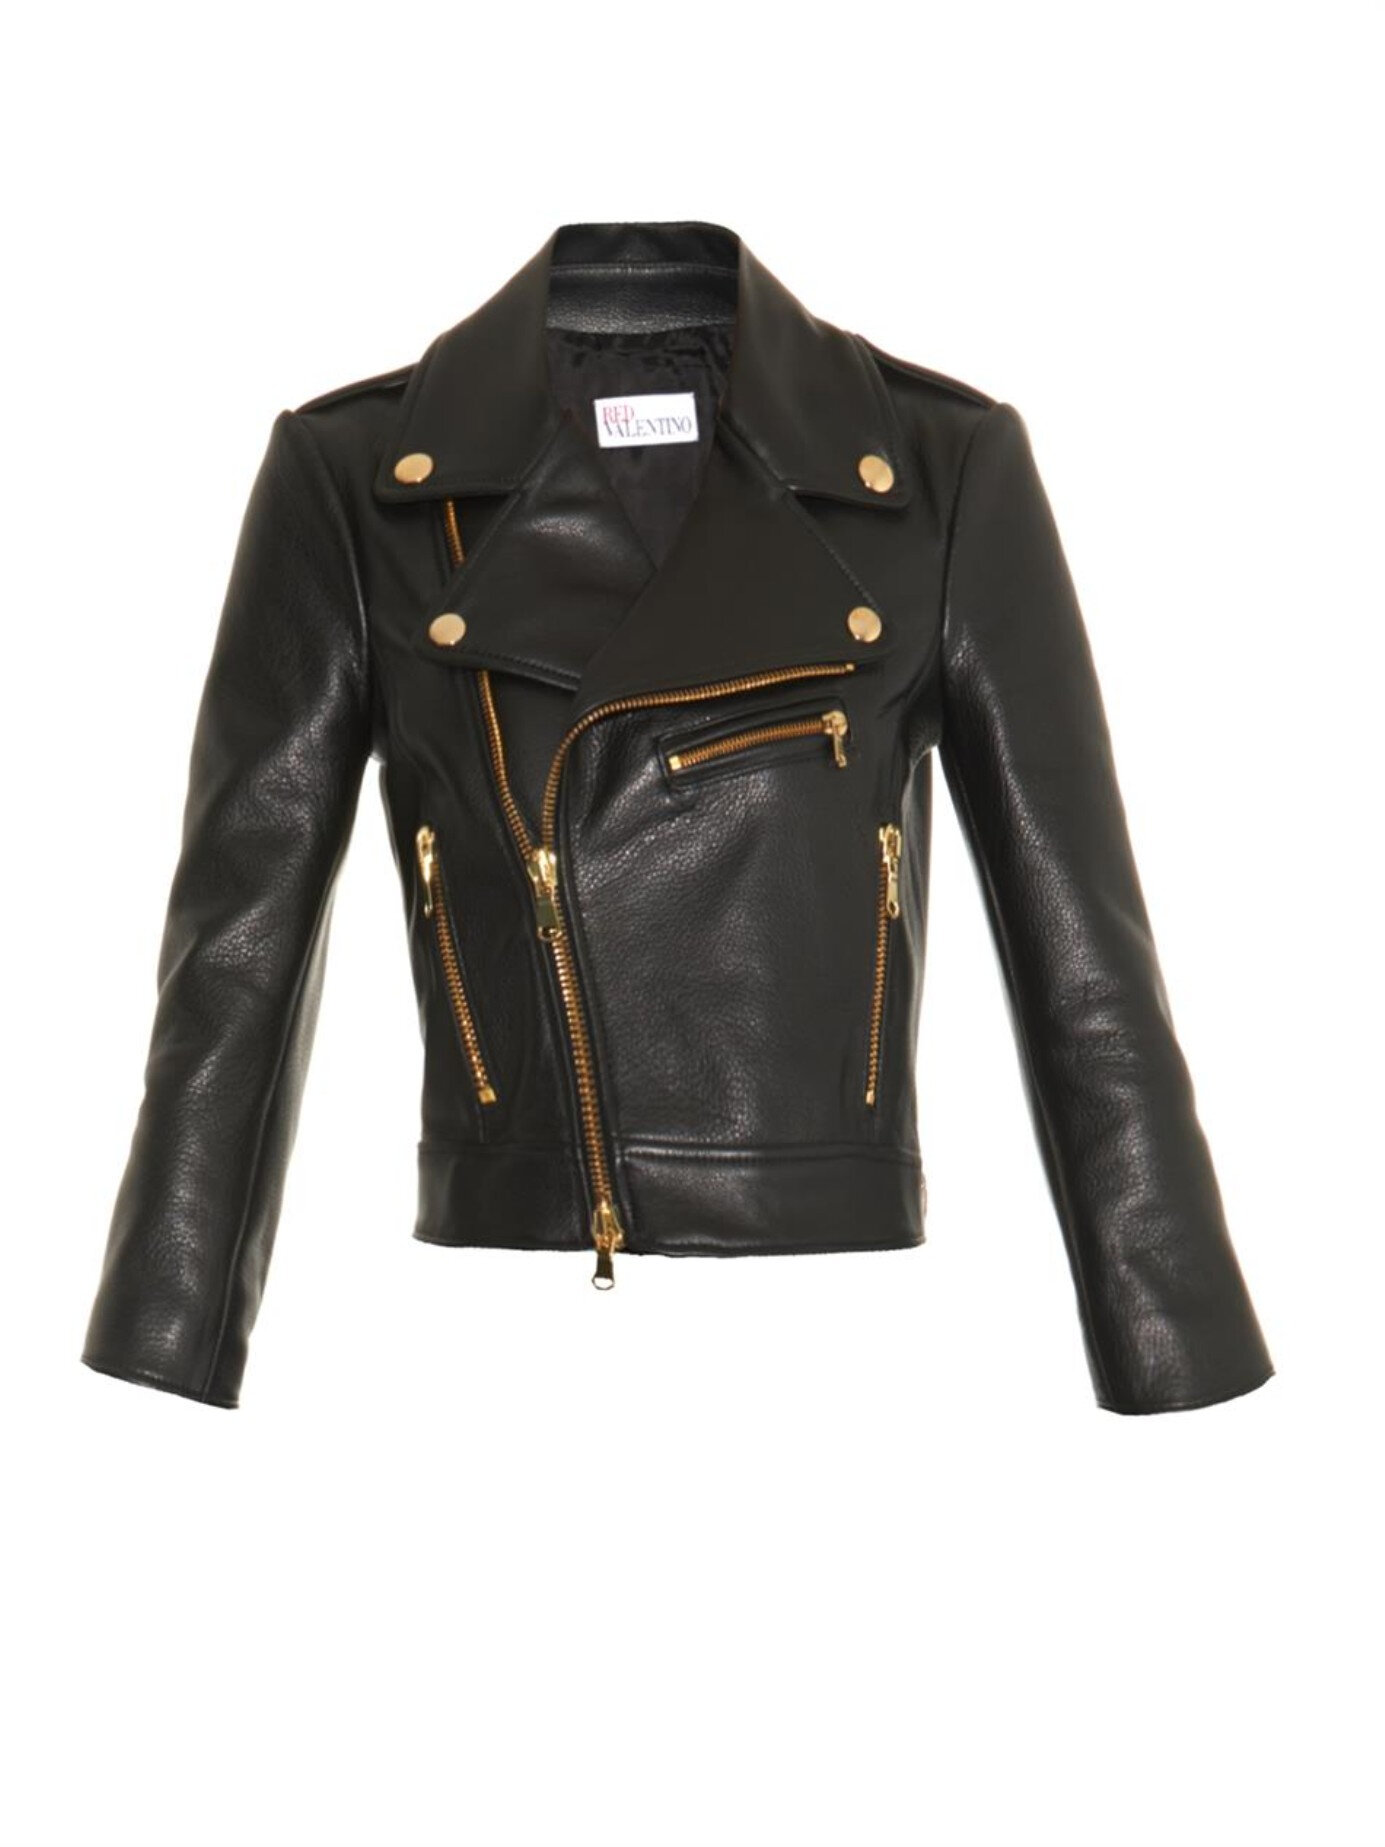 Valentino leather jacket - アウター